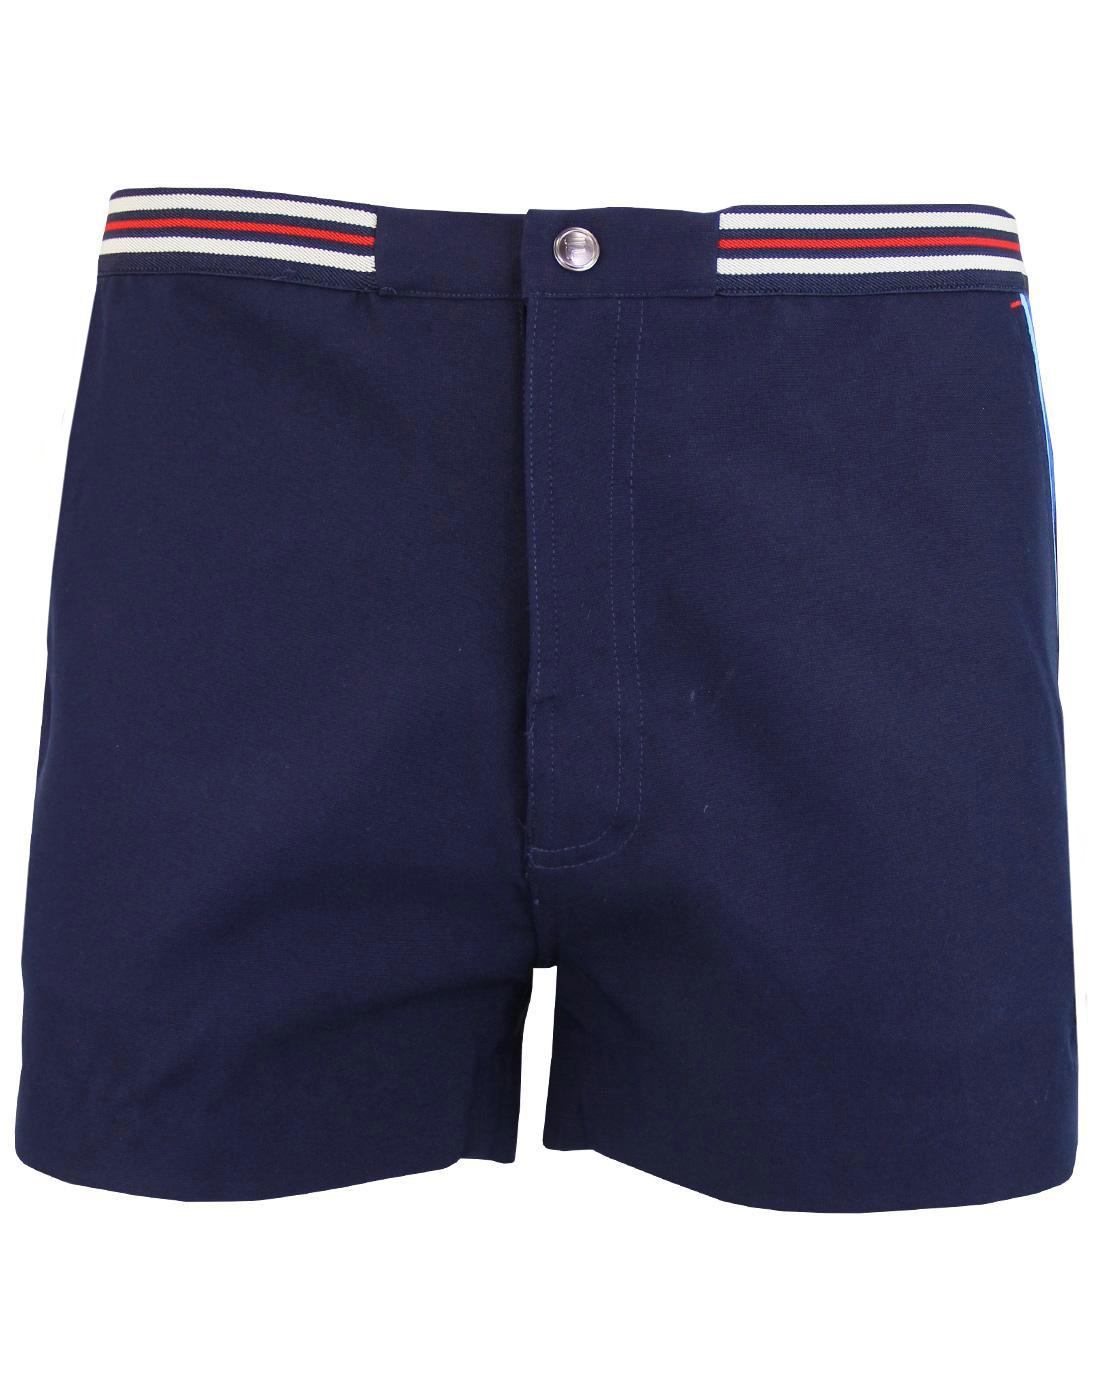 70s tennis shorts